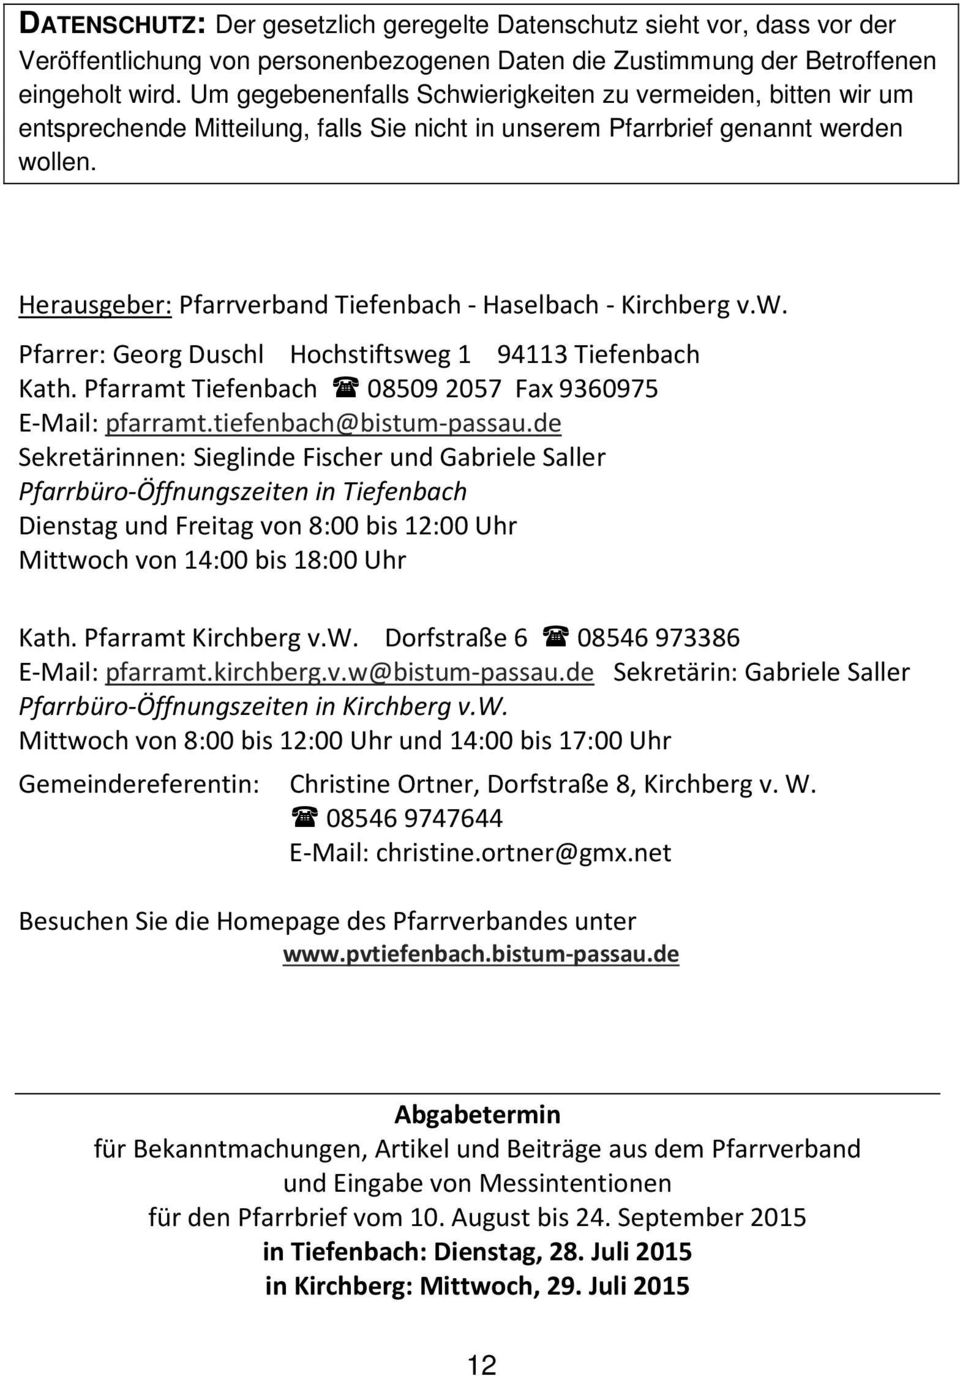 Herausgeber: Pfarrverband Tiefenbach - Haselbach - Kirchberg v.w. Pfarrer: Georg Duschl Hochstiftsweg 1 94113 Tiefenbach Kath. Pfarramt Tiefenbach 08509 2057 Fax 9360975 E-Mail: pfarramt.